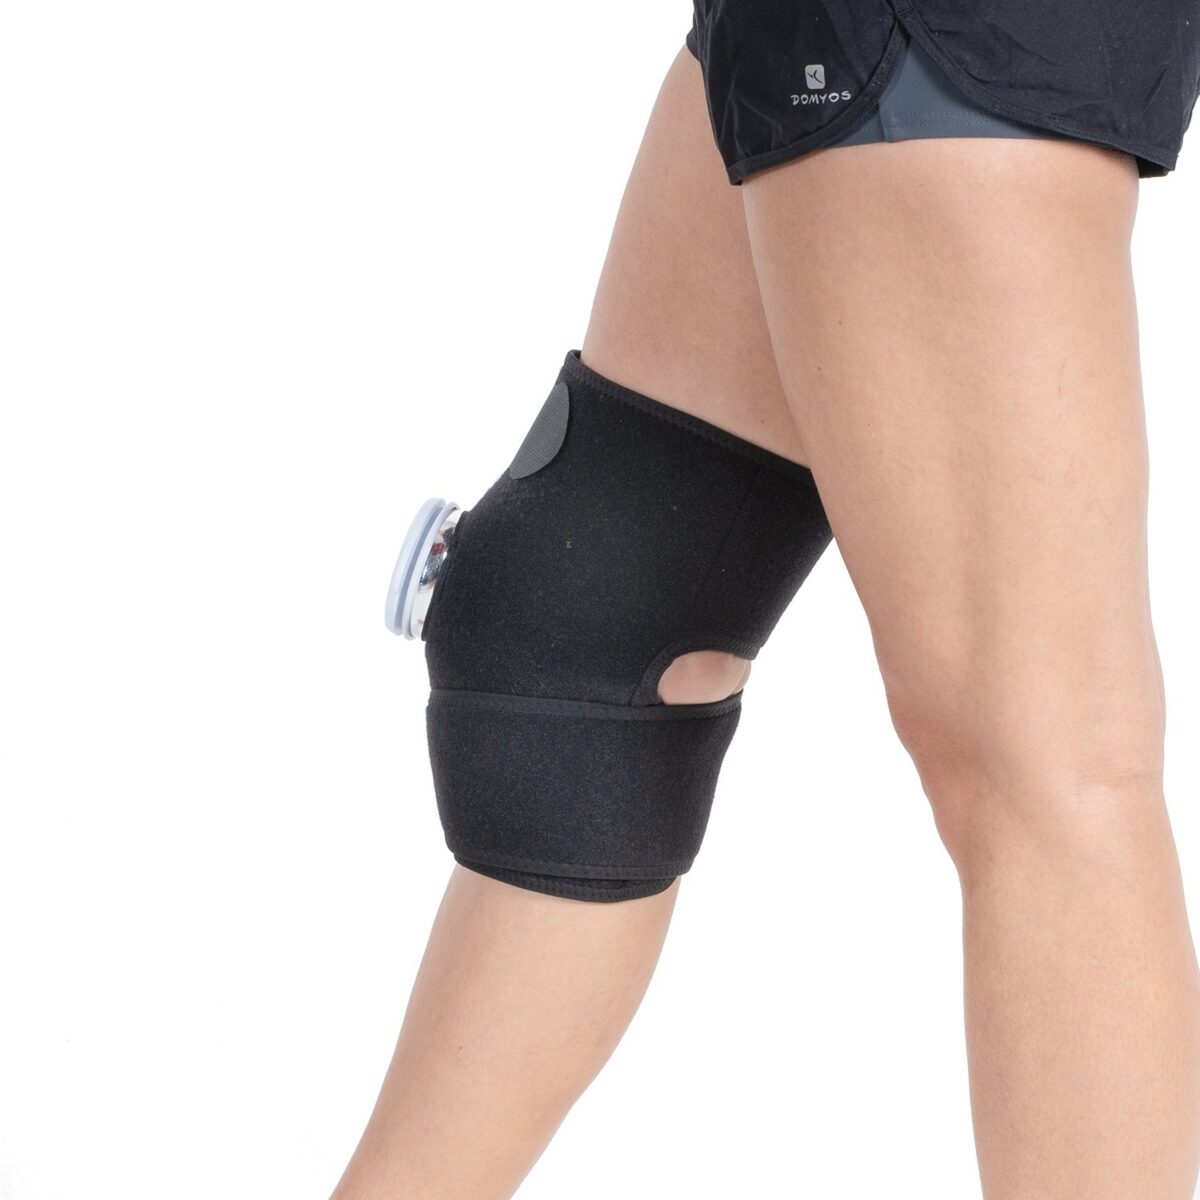 wingmed orthopedic equipments W538 ice bag knee support 53